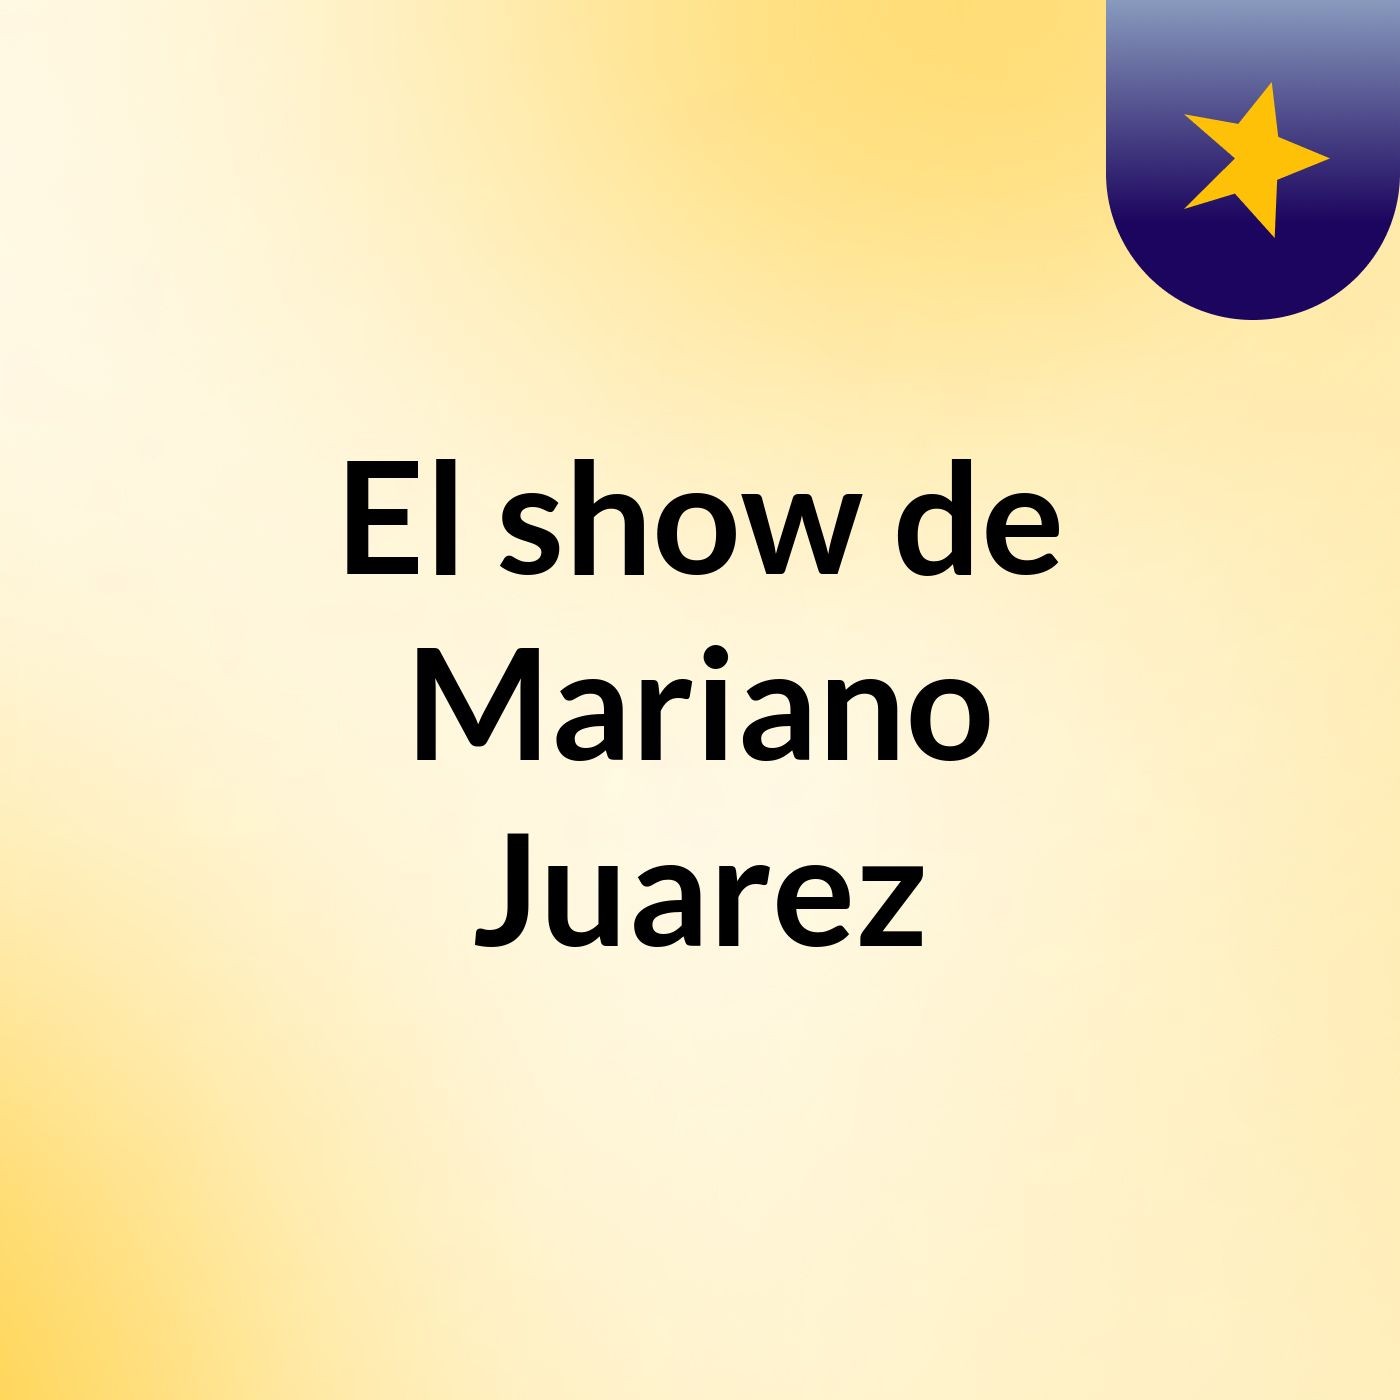 El show de Mariano Juarez